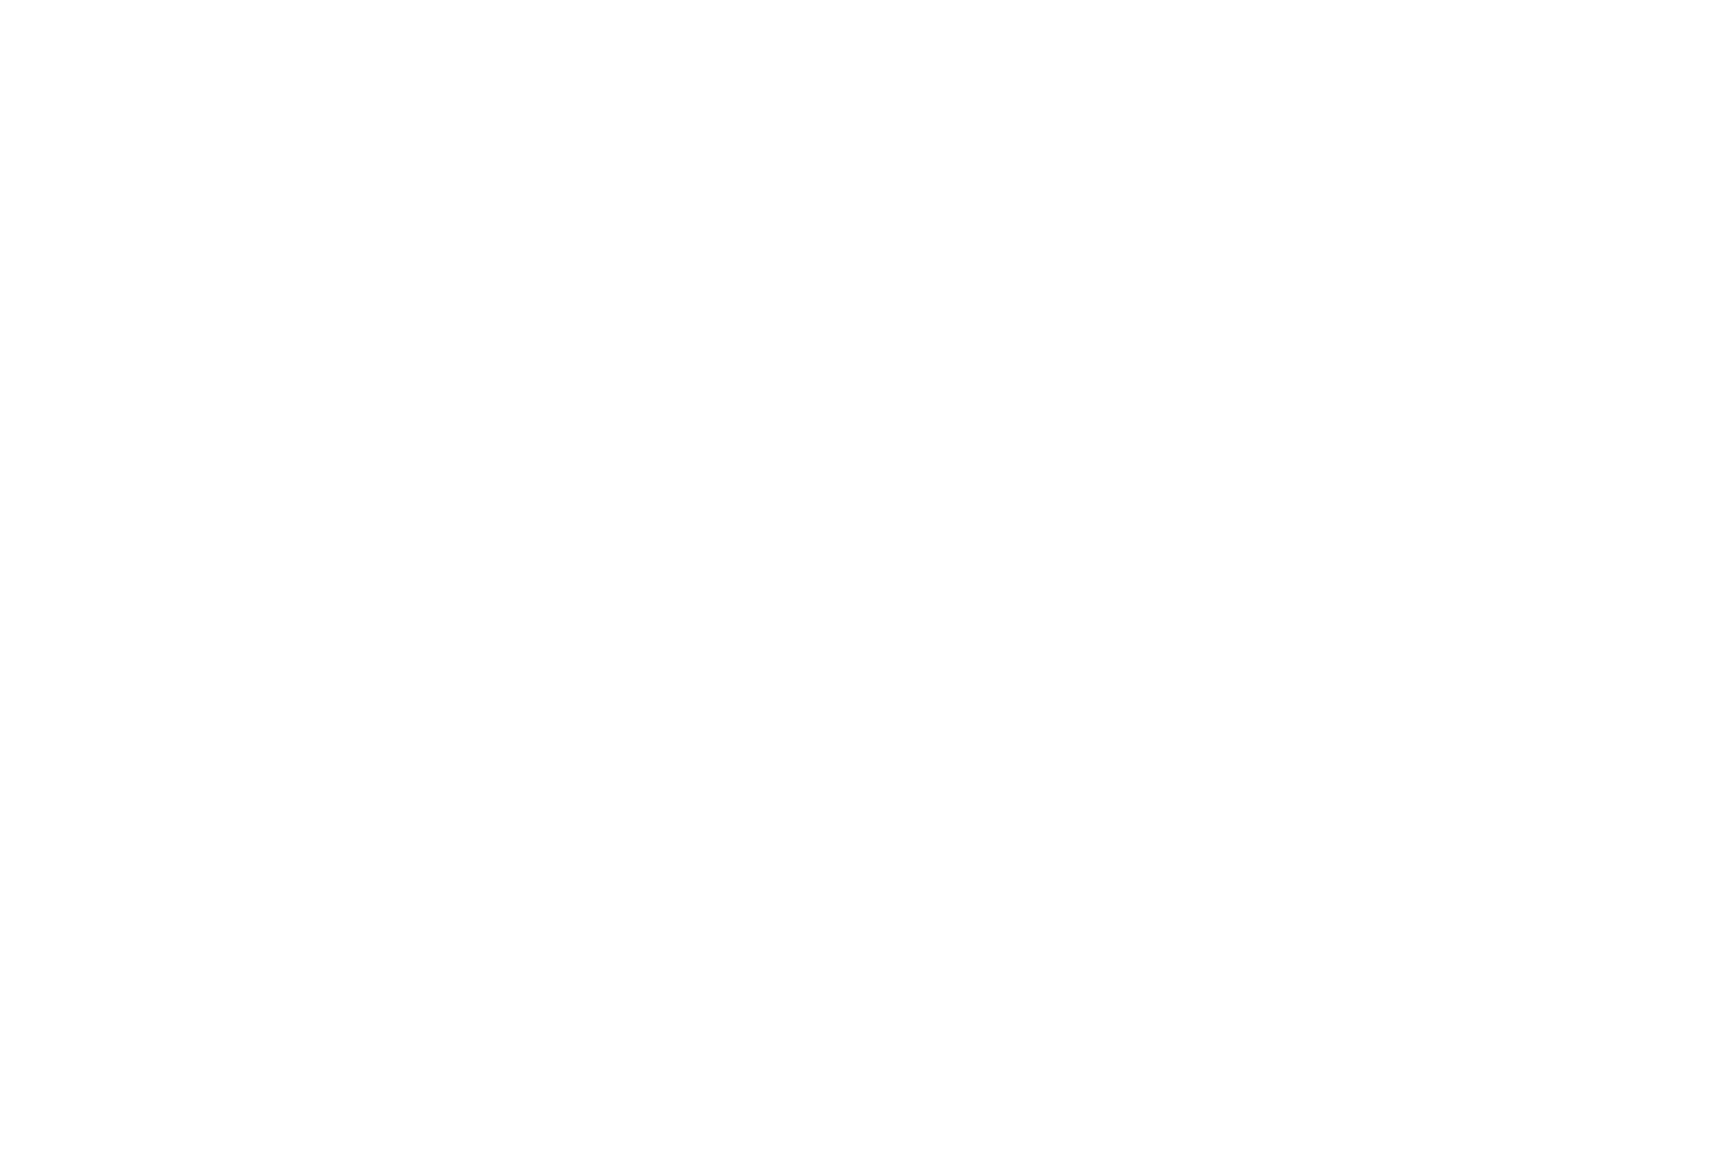 BEST PRODUCTION DESIGN - San Francisco Arthouse Short Festival - 2023